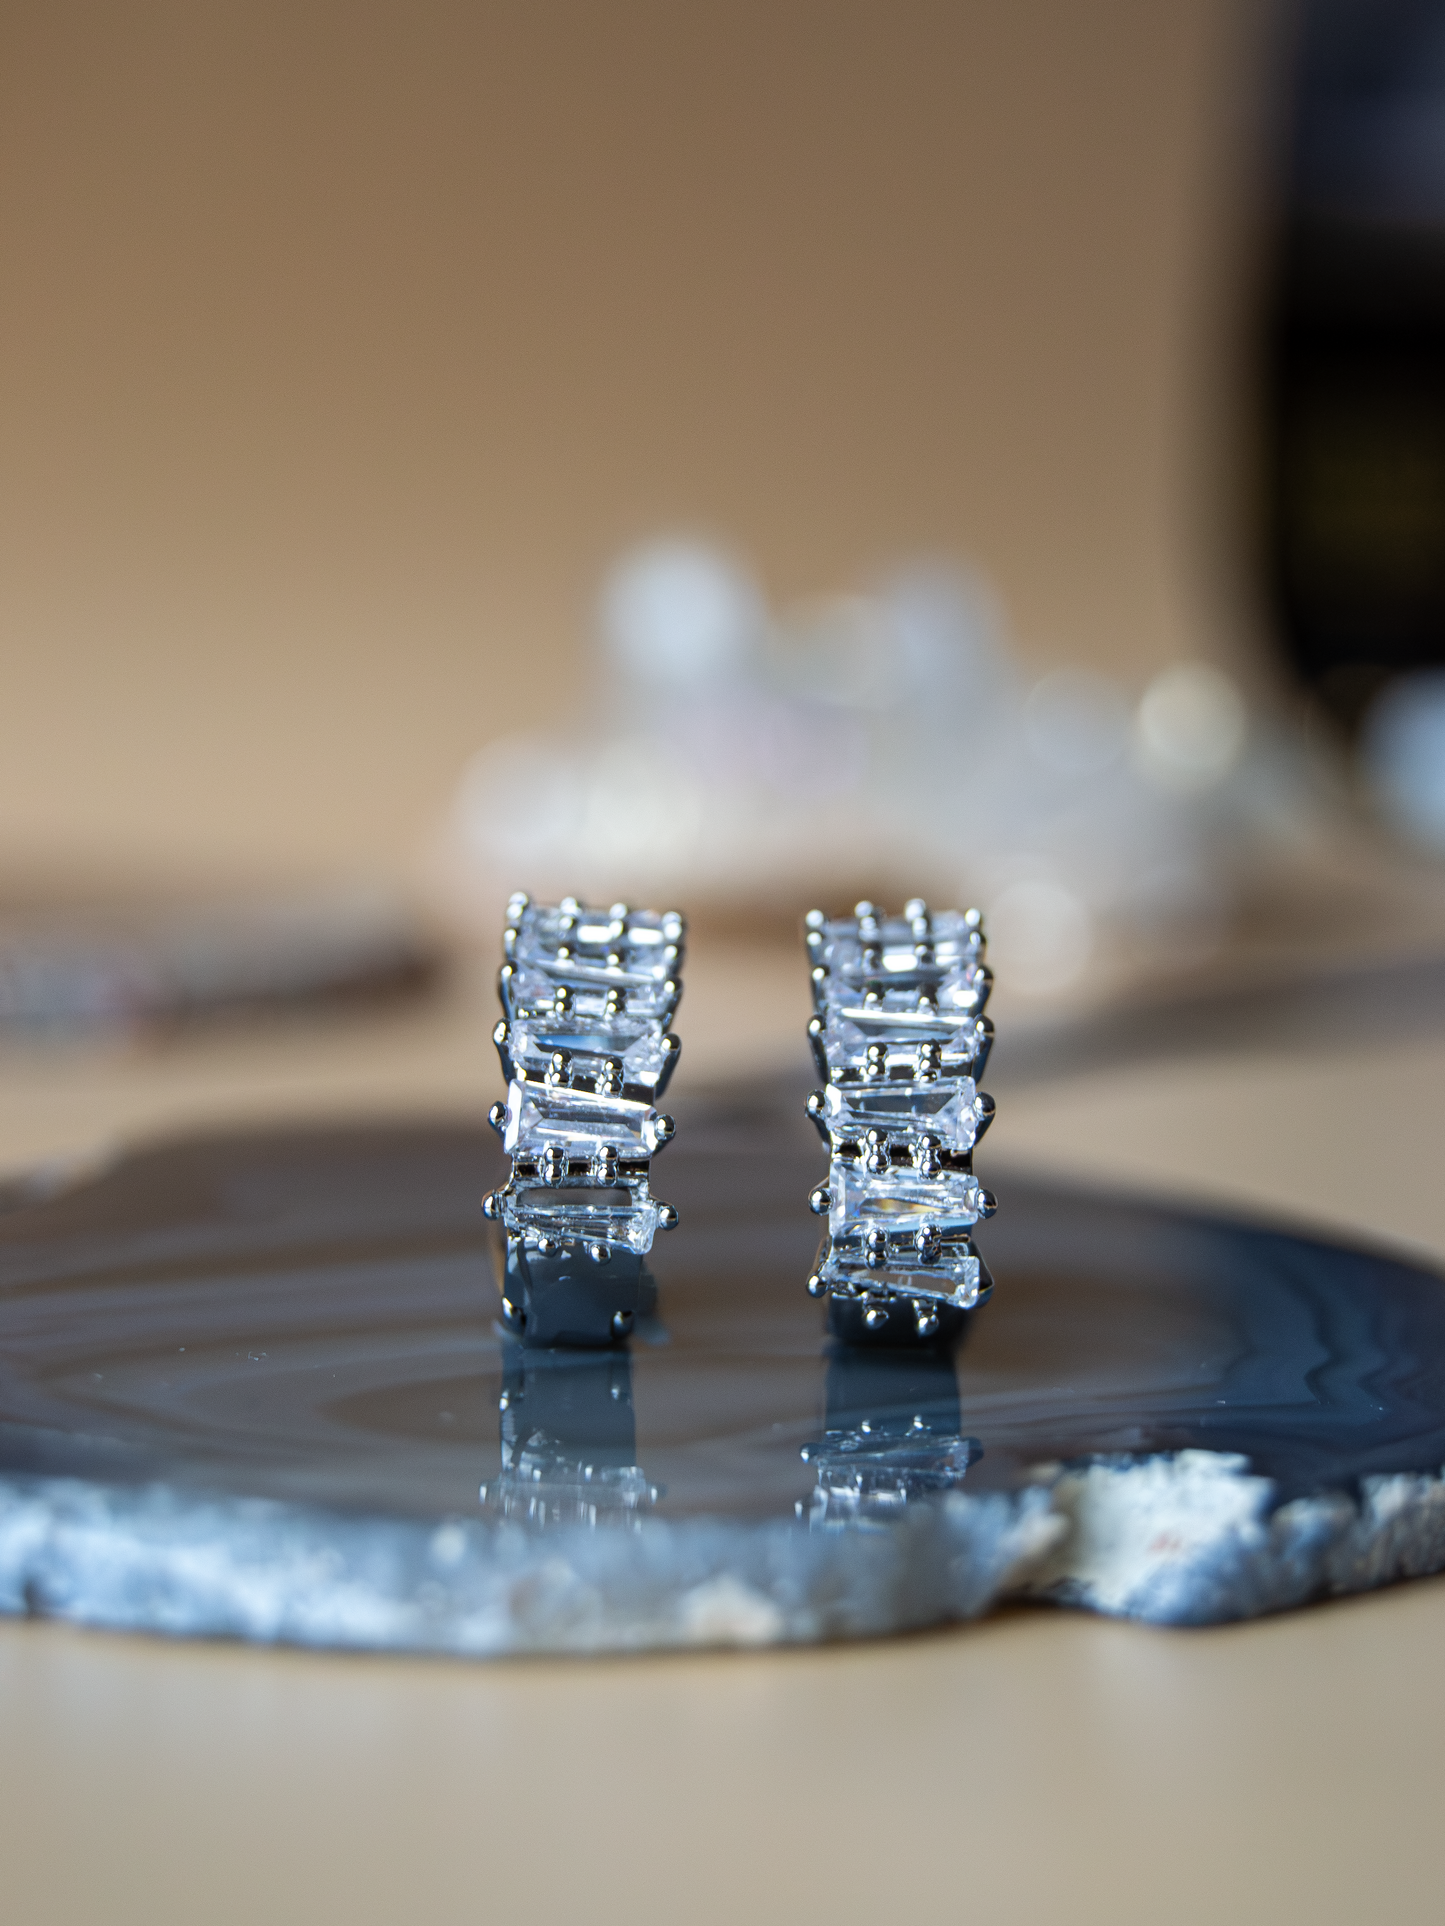 2 Pieces Diamond Earrings Silver Color Zircon Stones